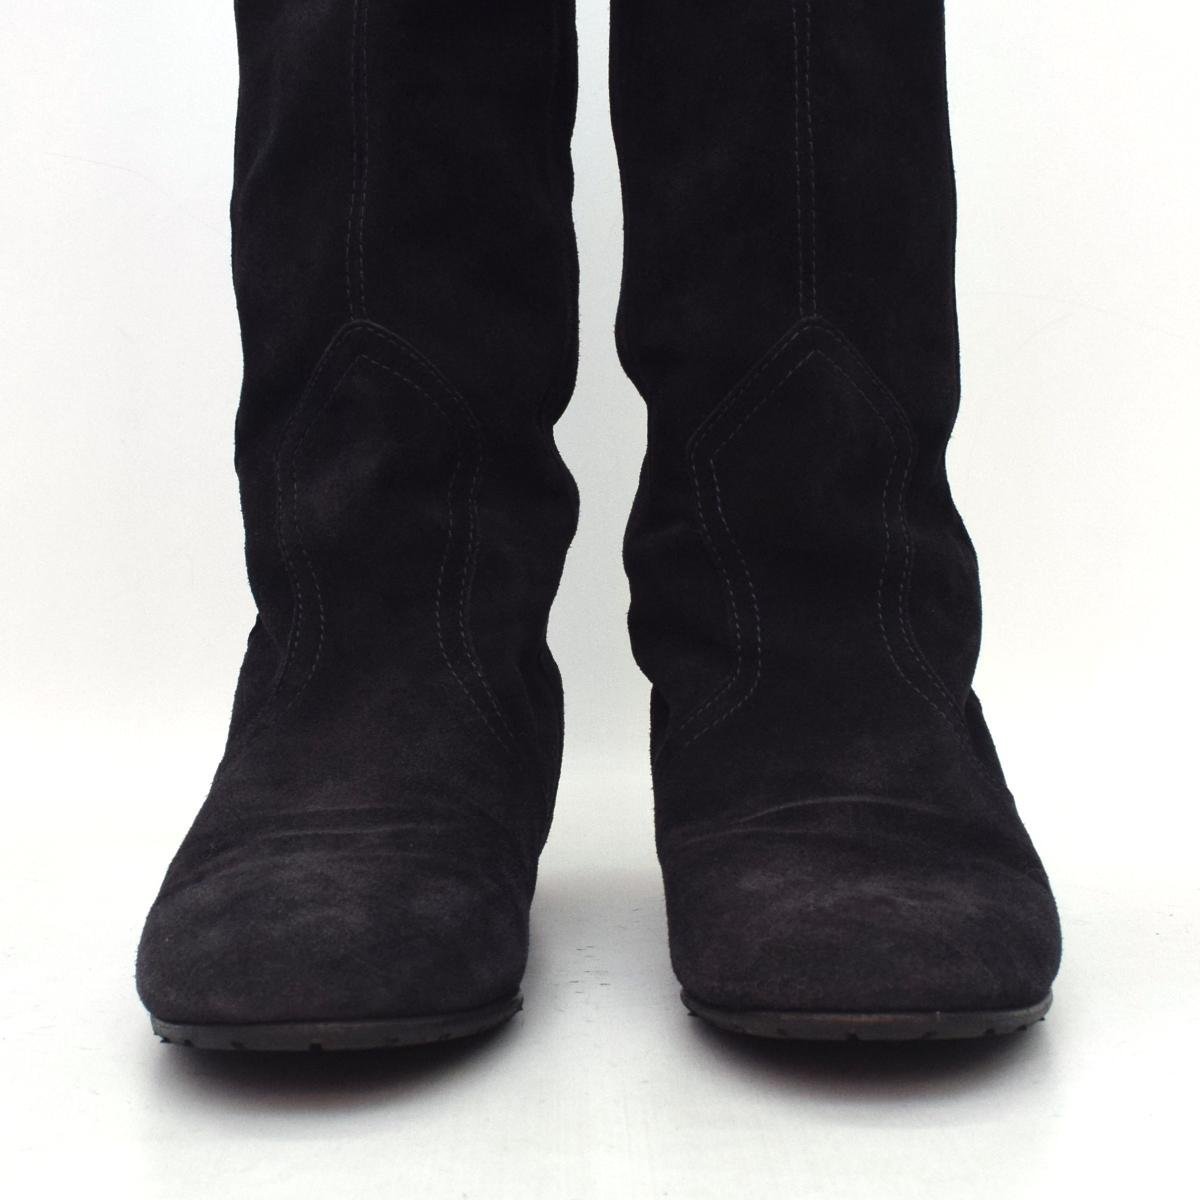 FABIO RUSCONI fabio rusko-ni suede long boots SIZE:35( approximately 22.5cm) [S205365]